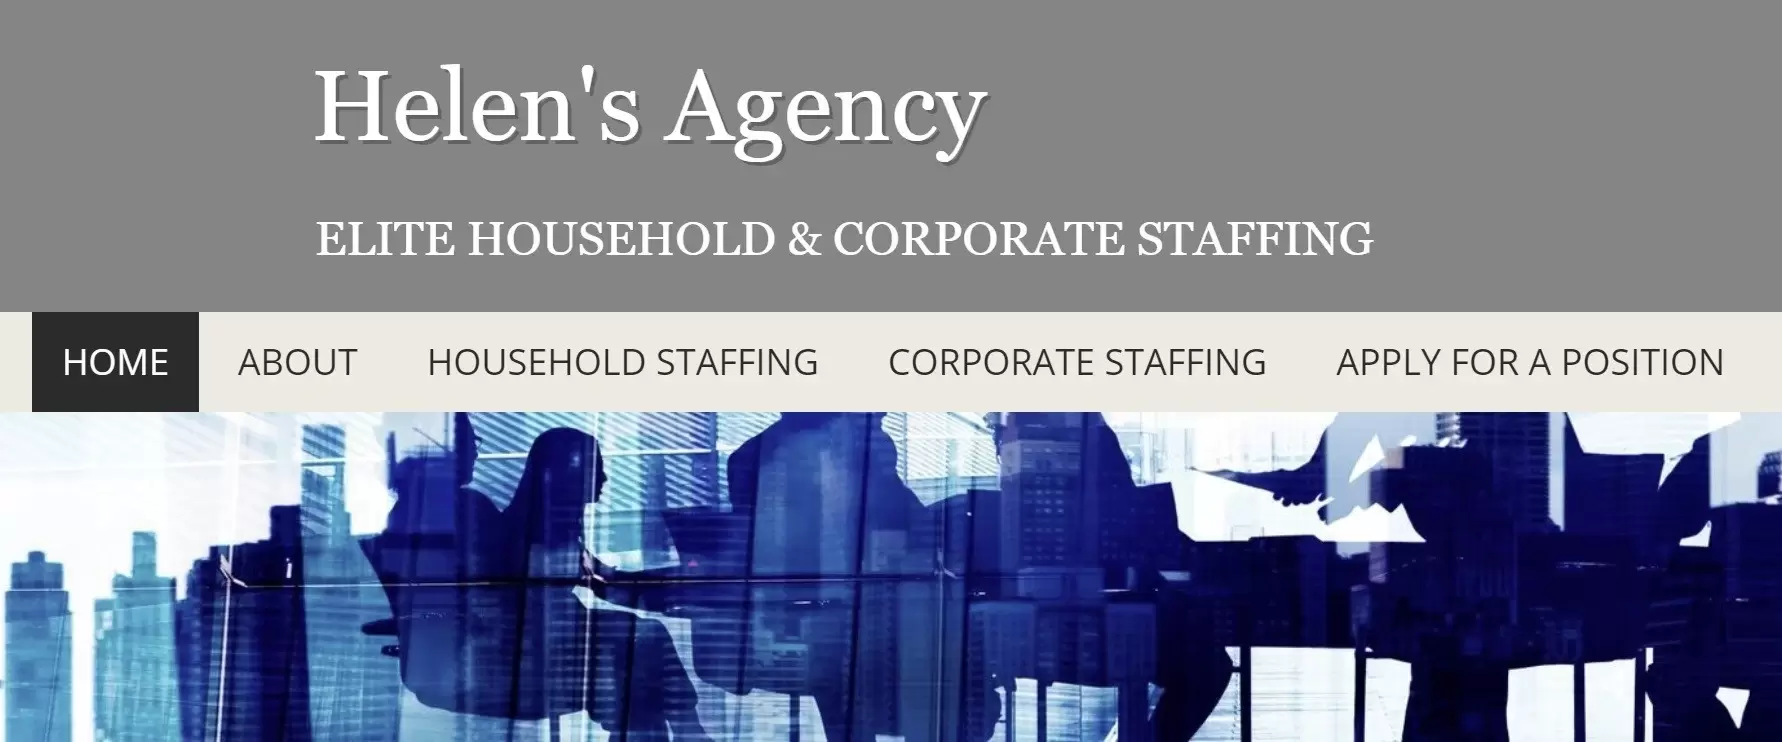 Helen's Agency company profile